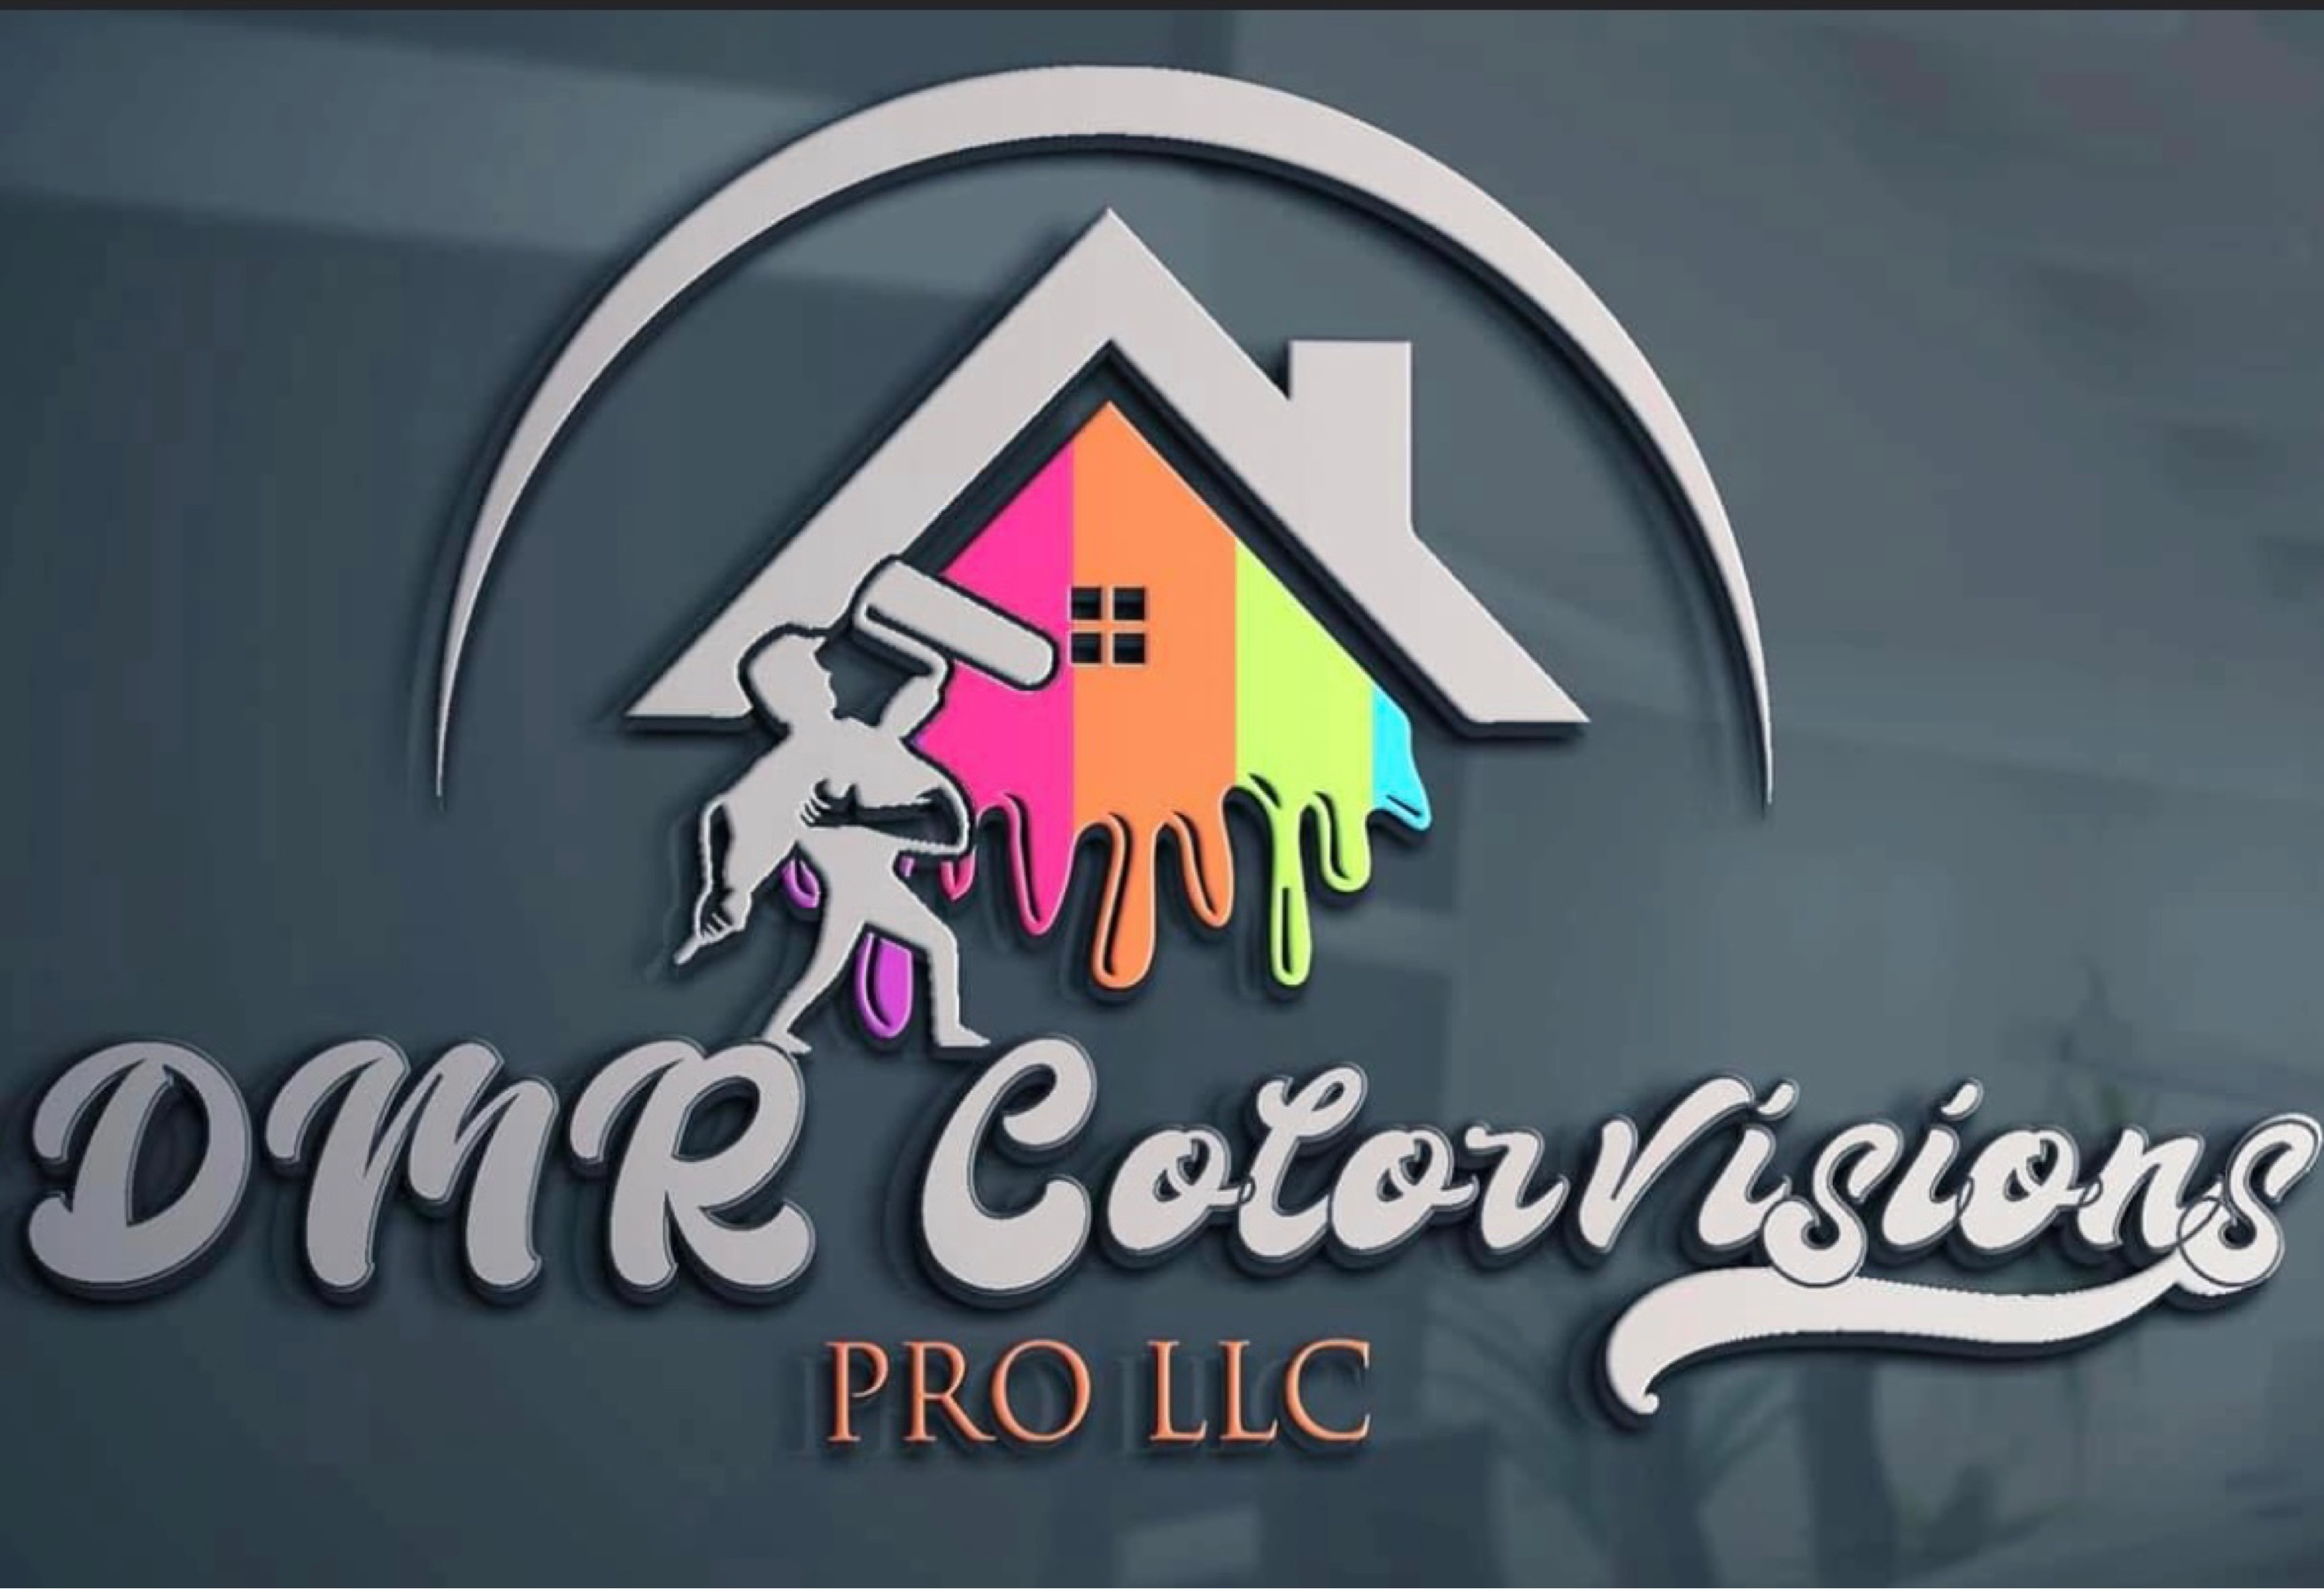 DMR Colorvisions PRO, LLC Logo